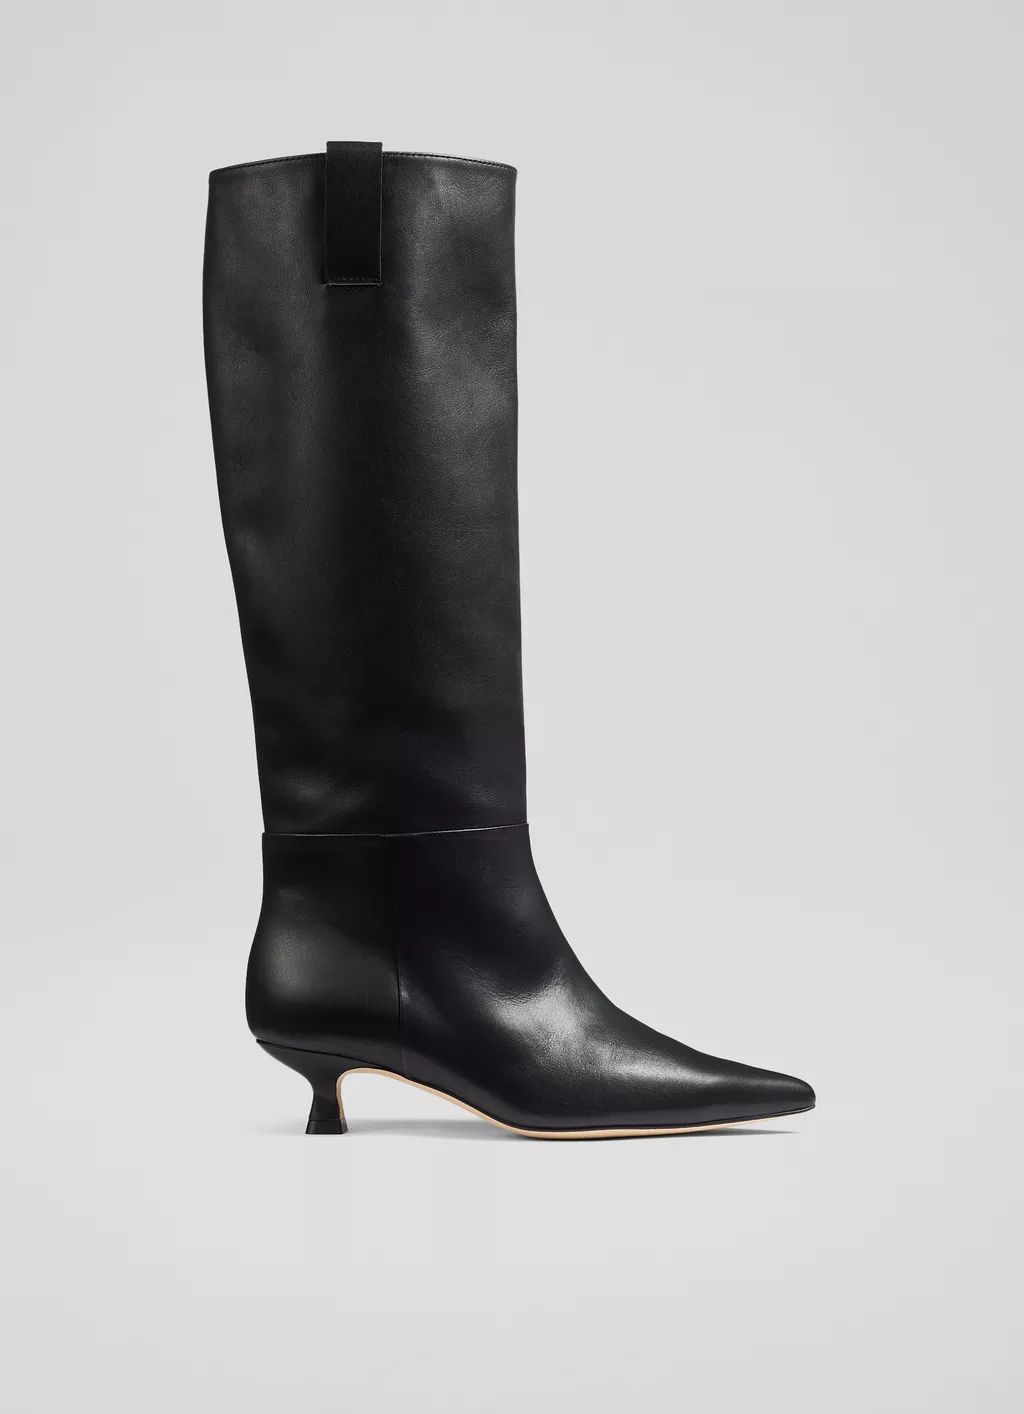 Eden Black Leather Western Style Knee-High Boots | L.K. Bennett (UK)